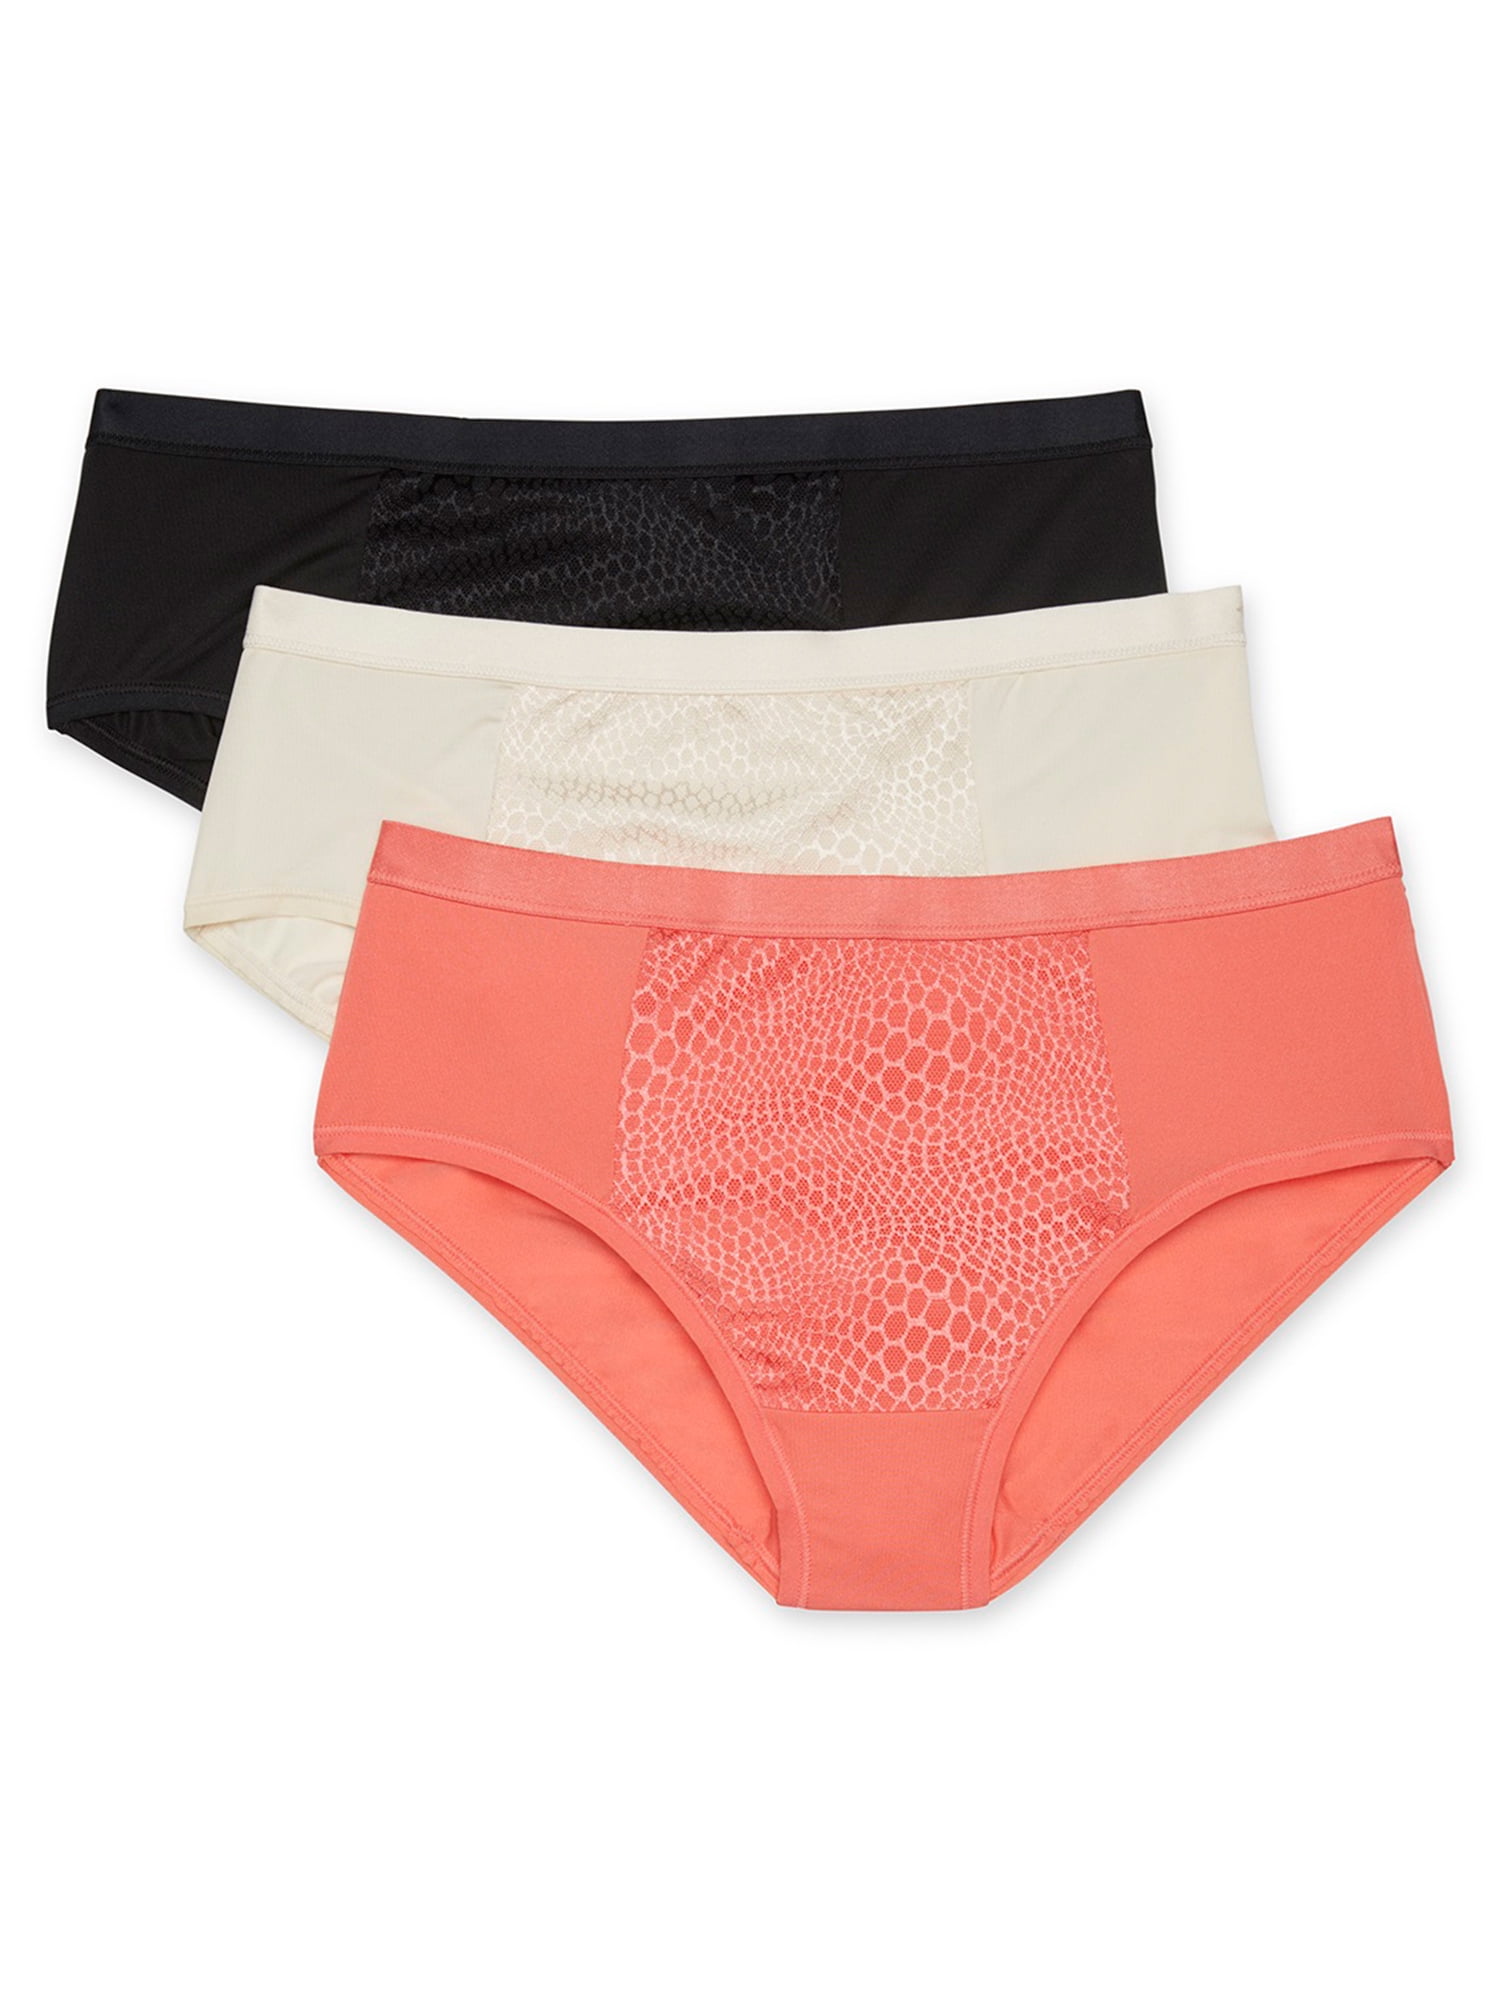 Warners ~ Women's Hipster Underwear Panties Modal Blend 4-Pair ~ 2XL/9, Creo Casa Milano